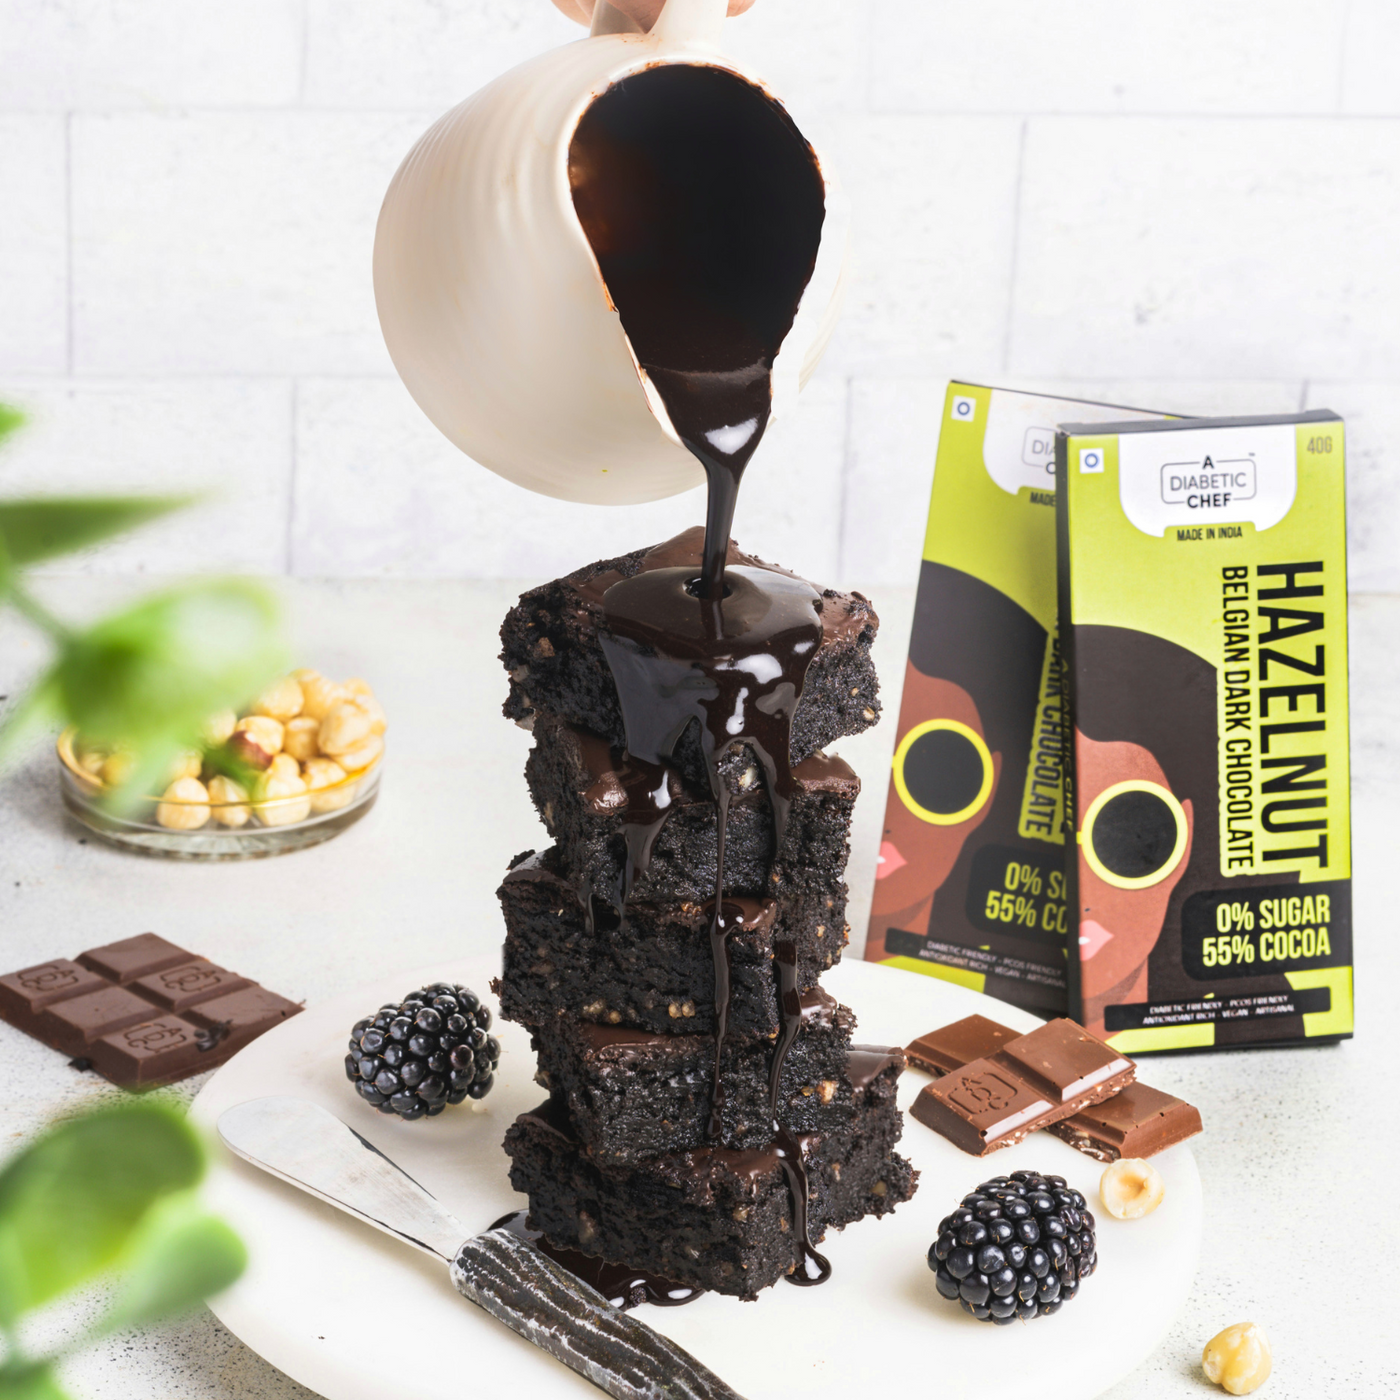 A Diabetic Chef Hazelnut Belgian Dark Chocolate | Organic and Sugarfree | 55% Premium Cocoa | Diabetic Friendly | Vegan - 40g each (Pack of 3)